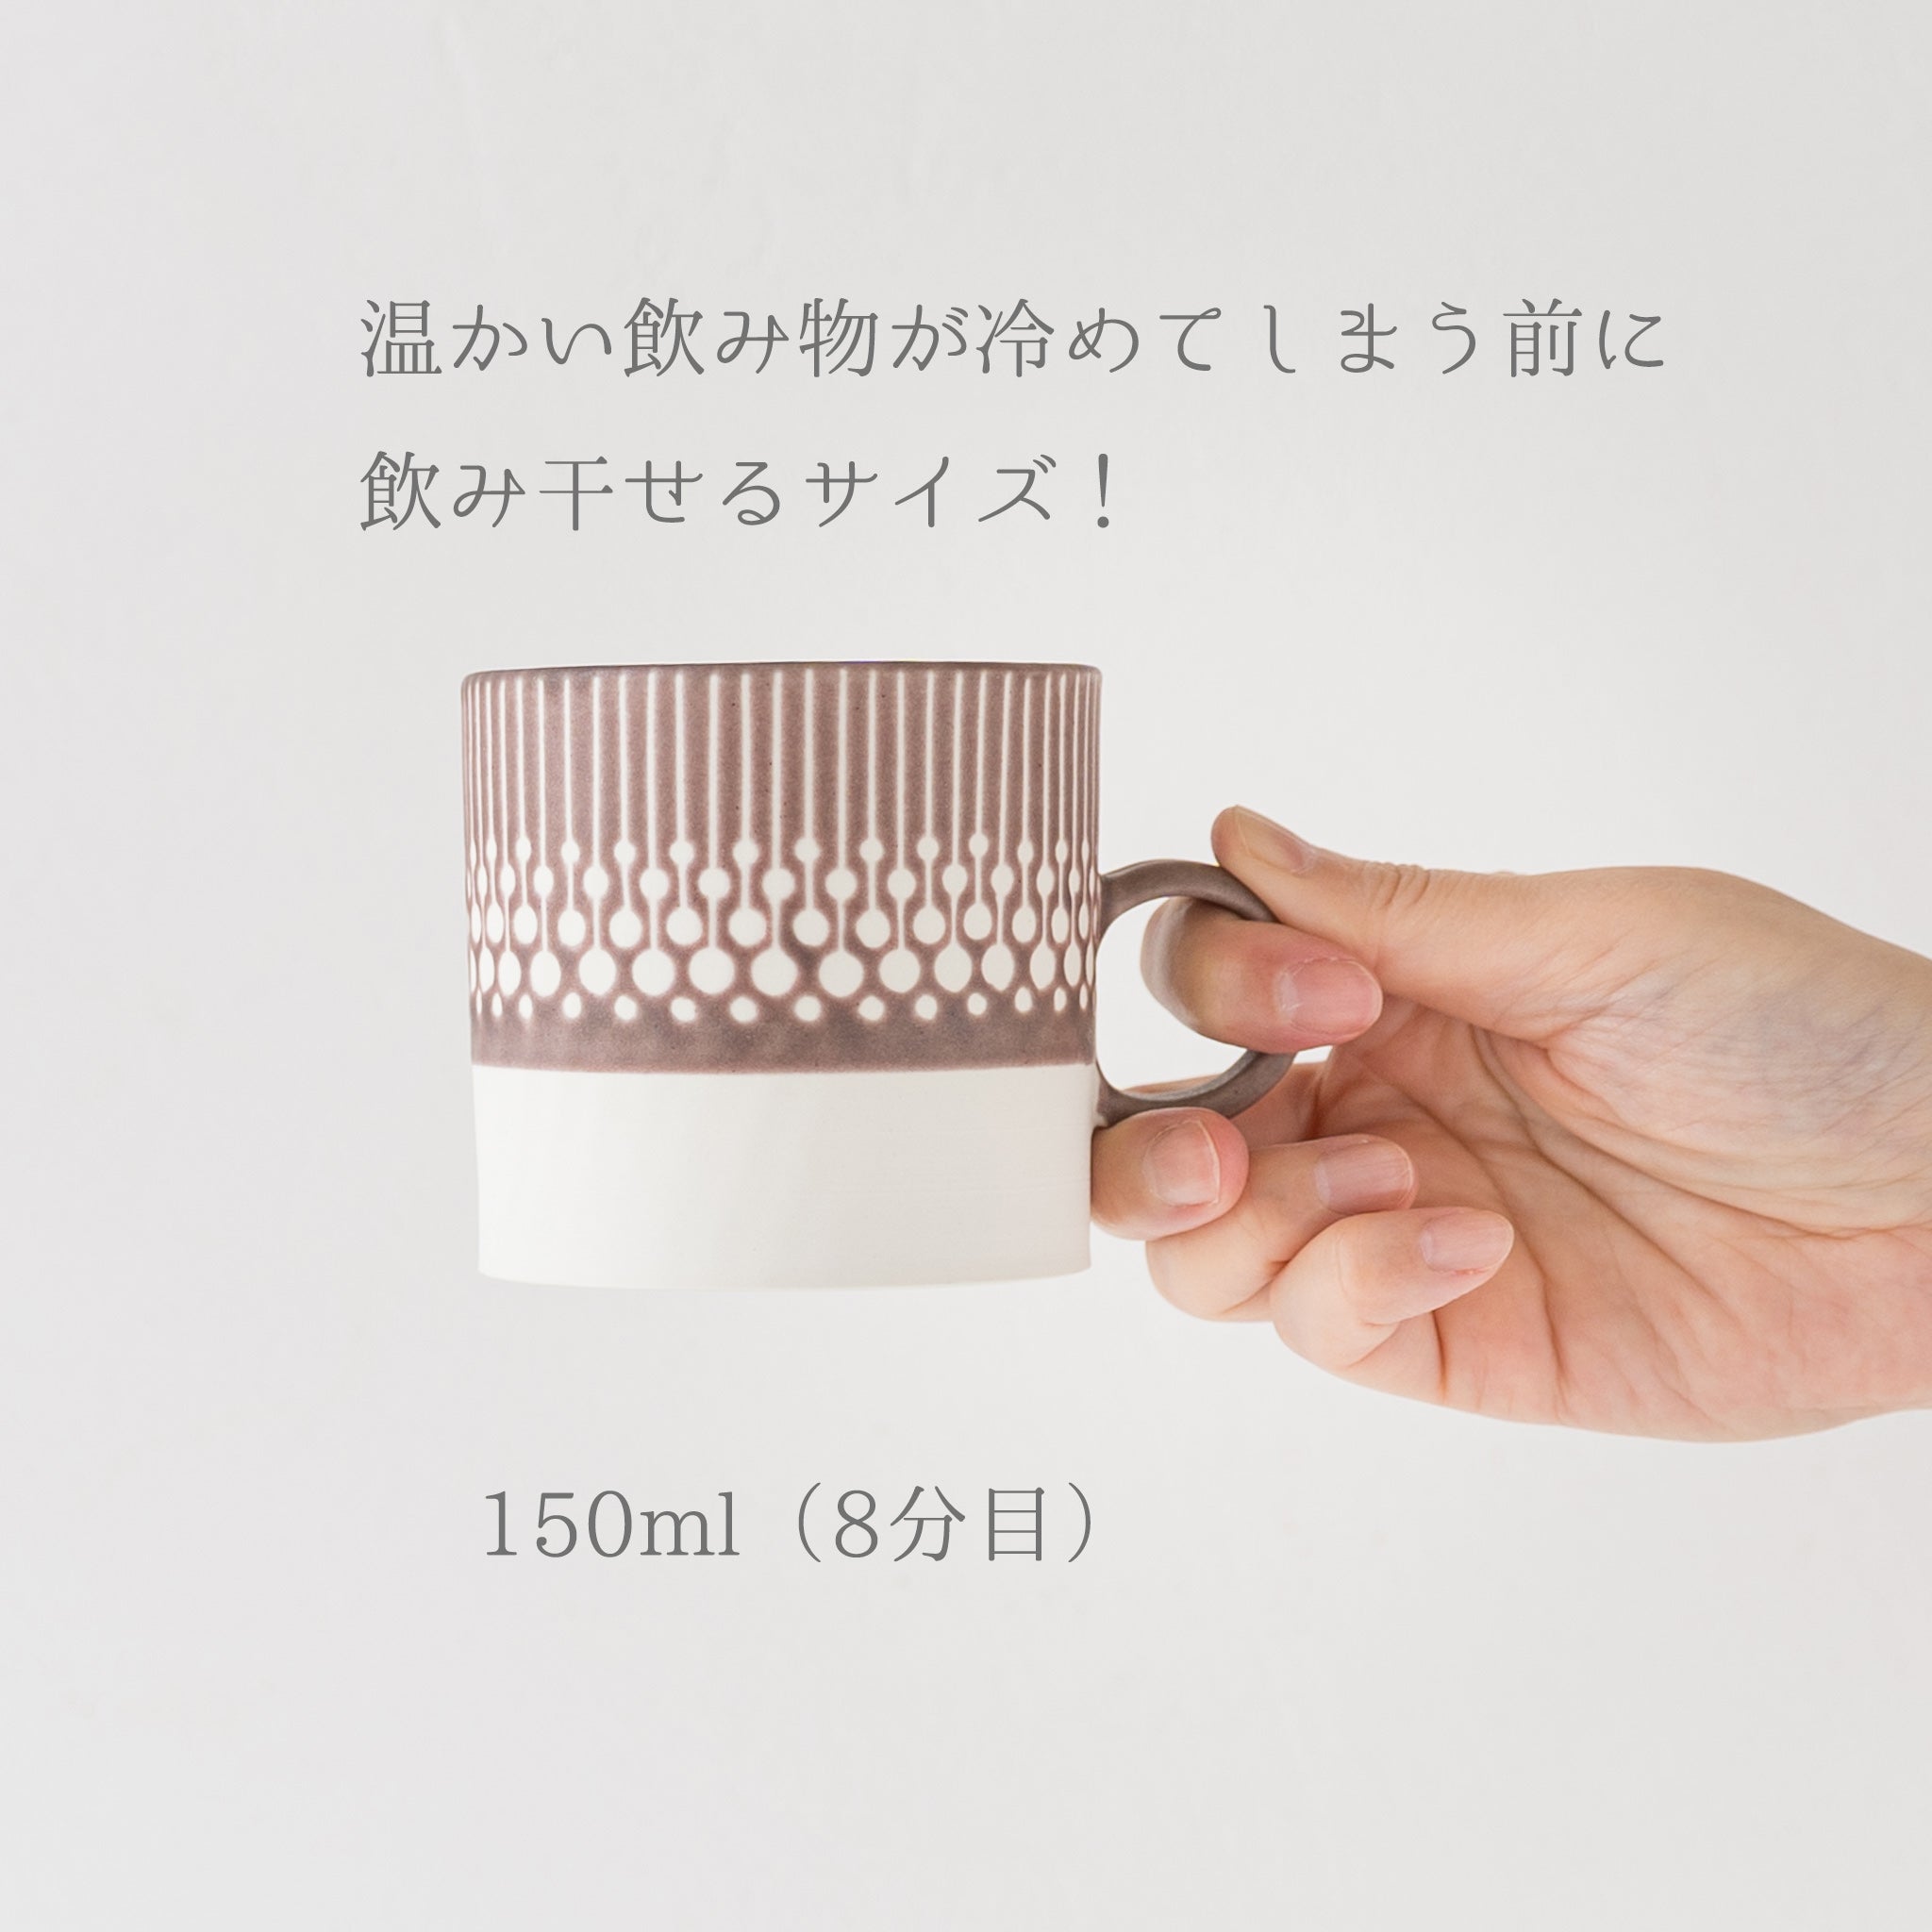 Yukari Nakagawa's mug that enriches your time at home